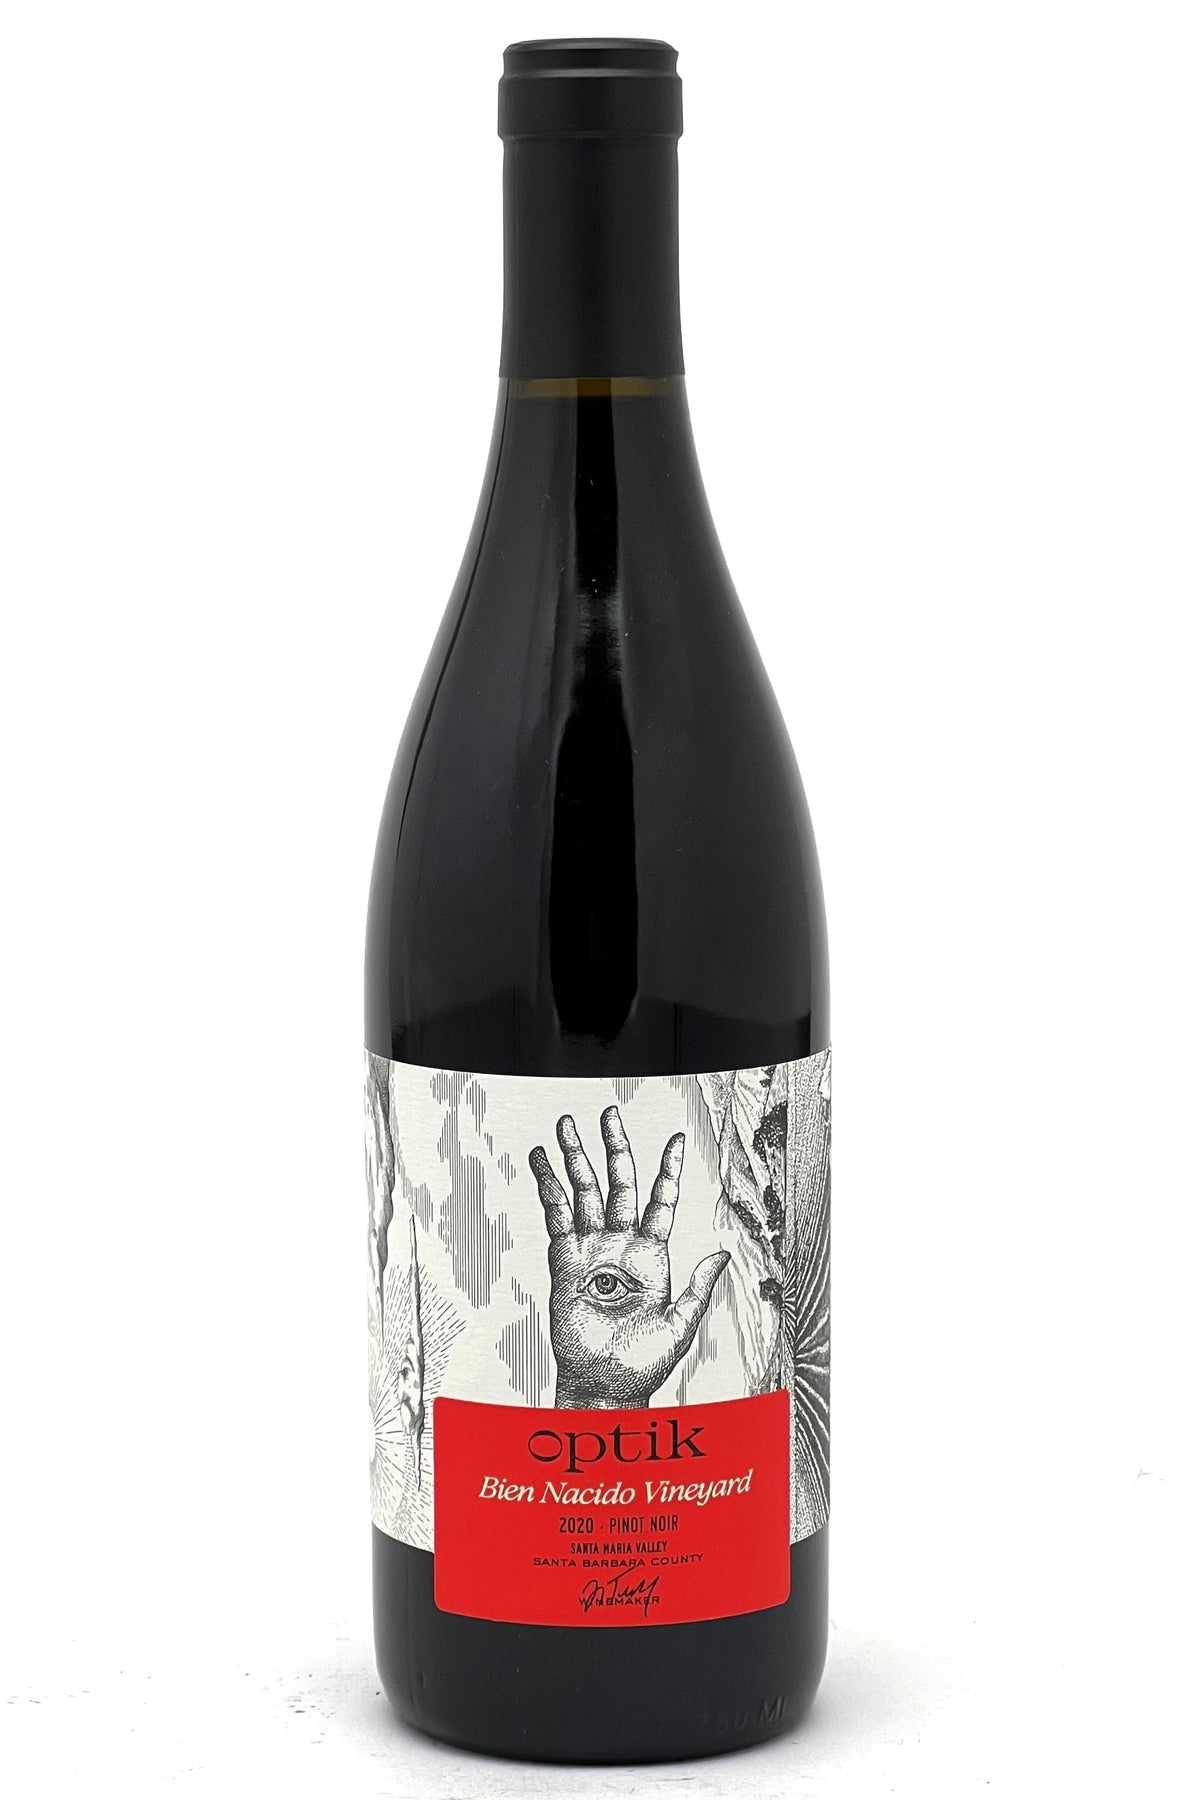 Optik 2020 Pinot Noir Bien Nacido Vineyard Santa Maria Valley